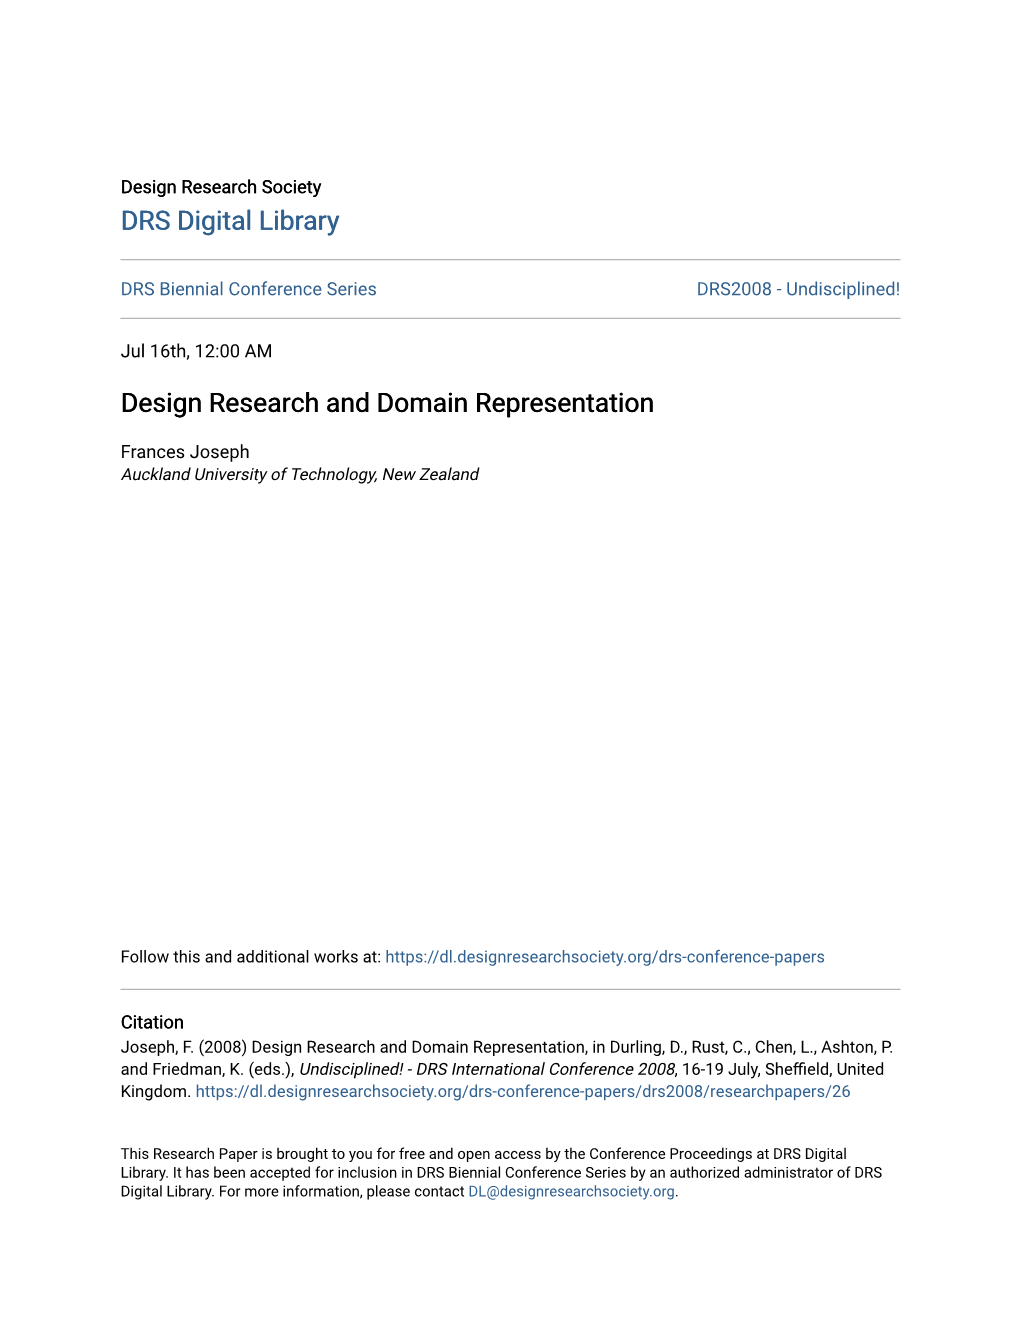 Design Research and Domain Representation